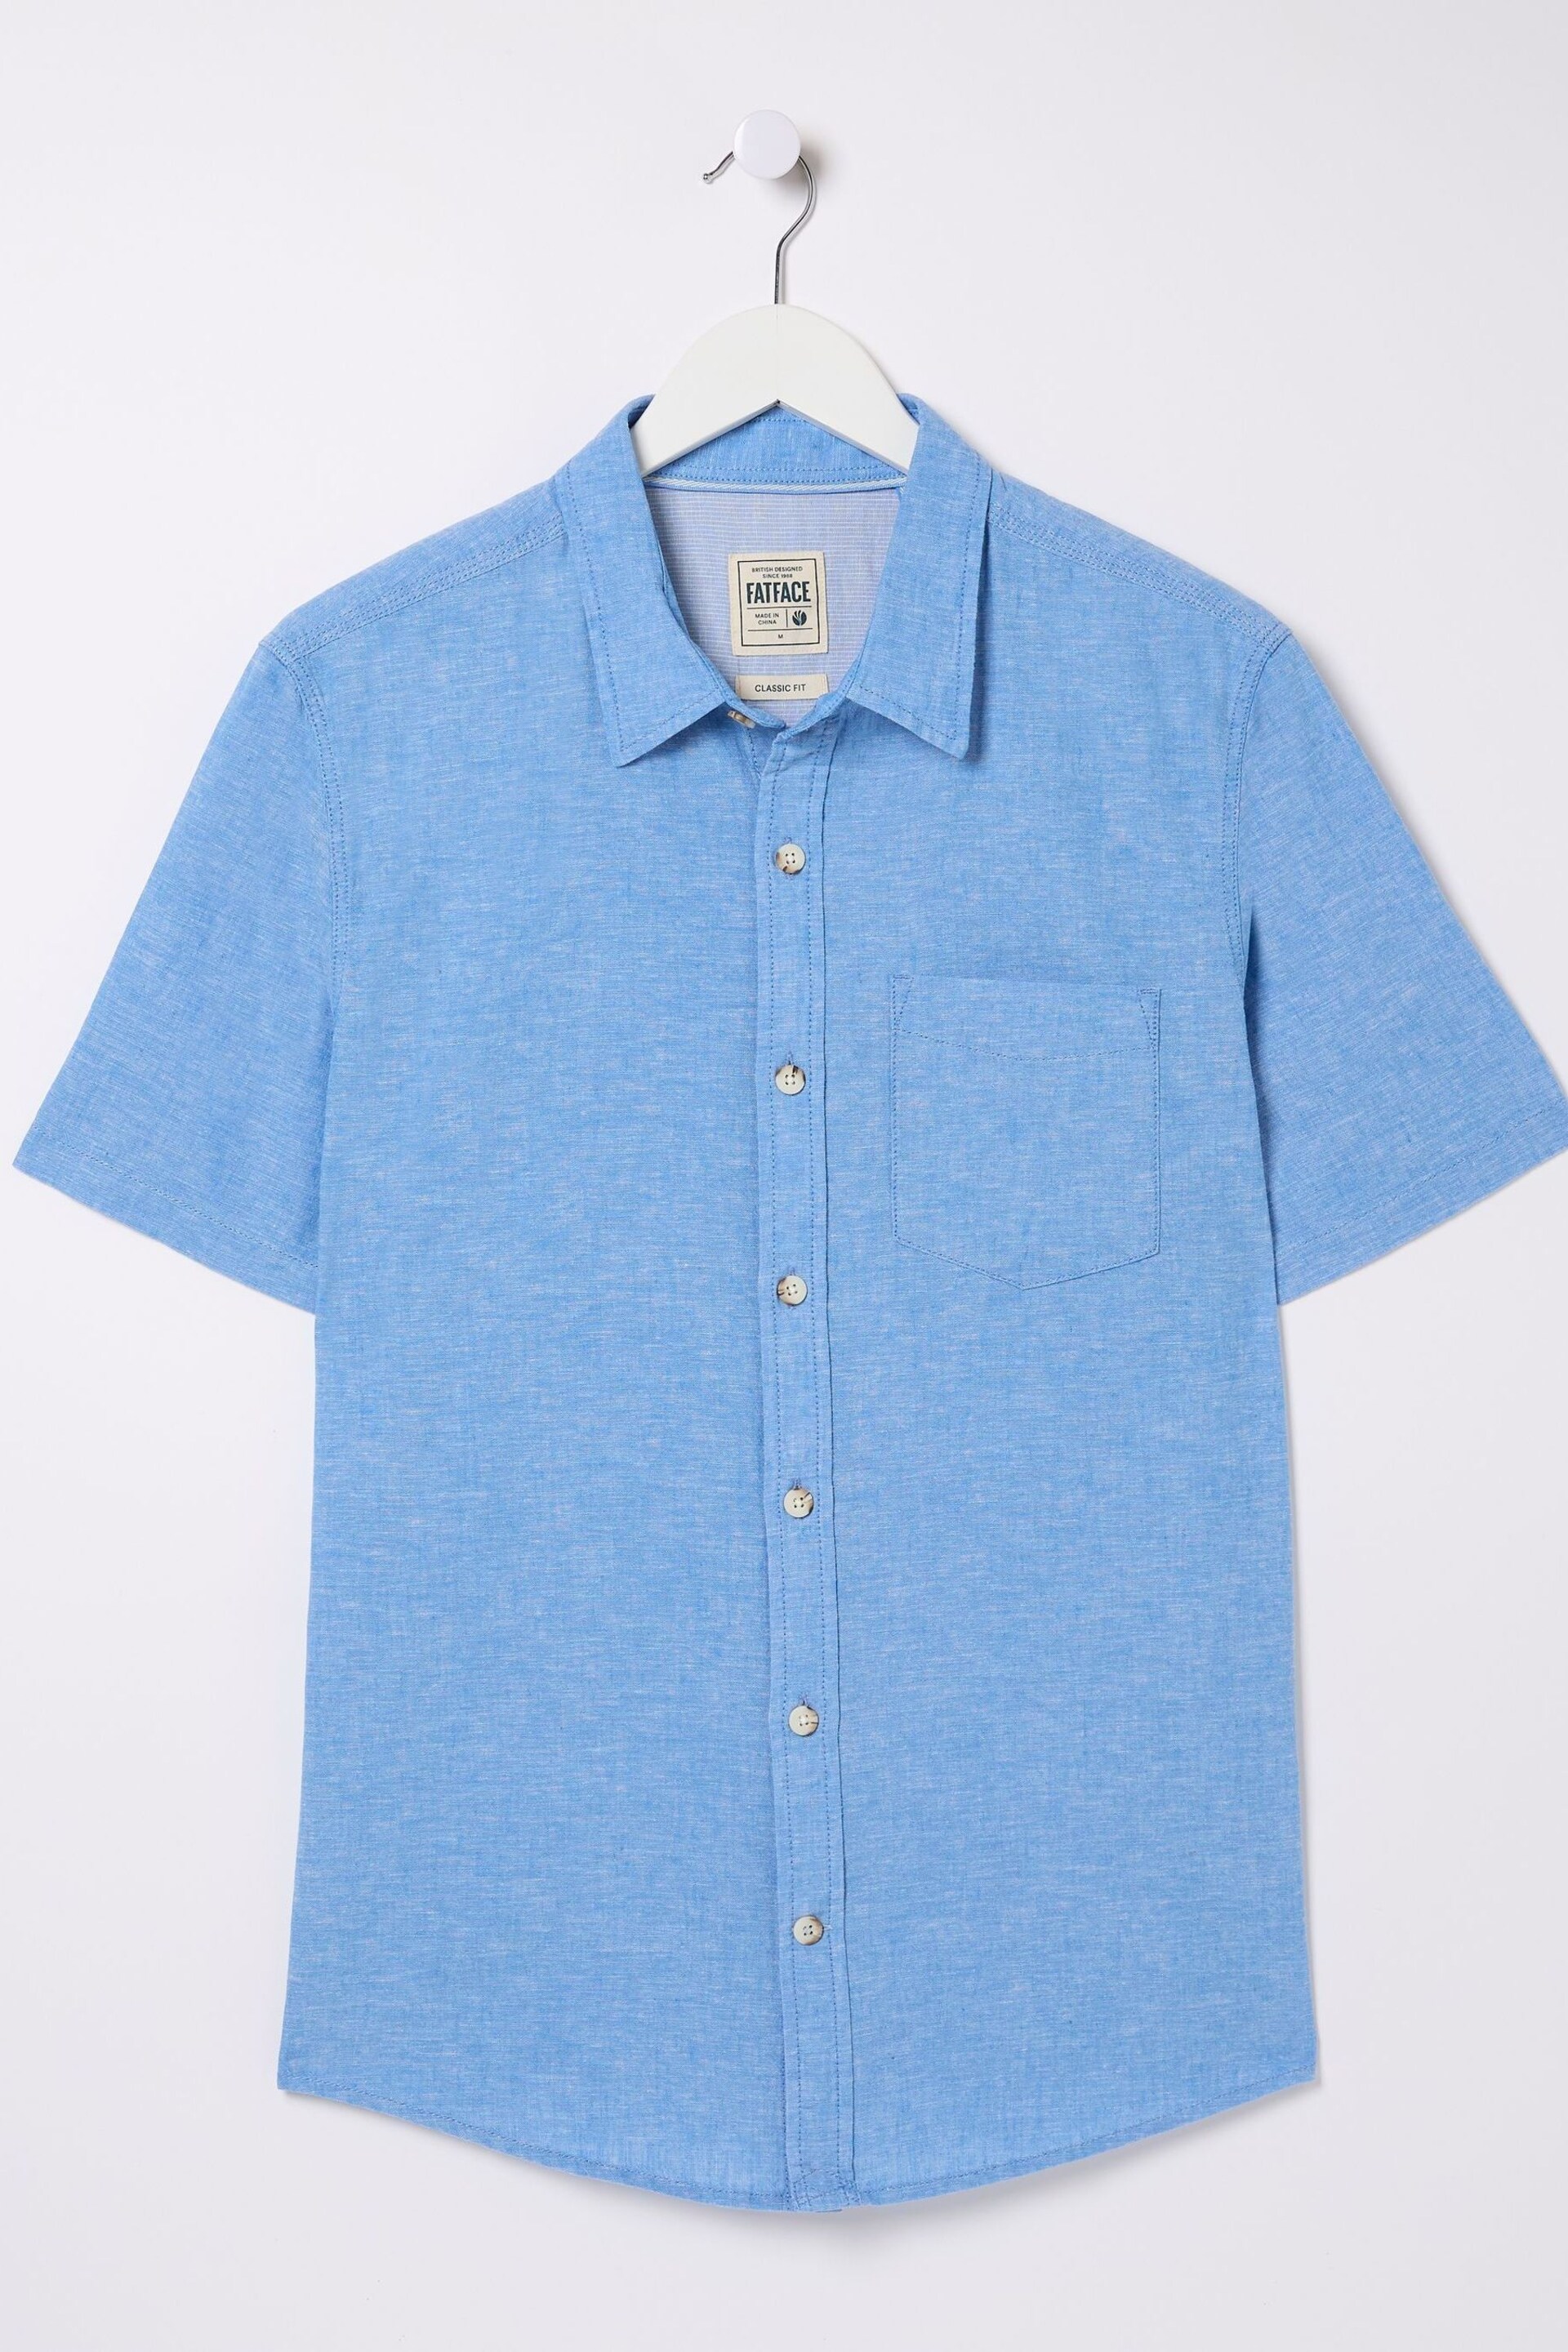 FatFace Blue Bugle Linen Cotton Shirt - Image 4 of 4